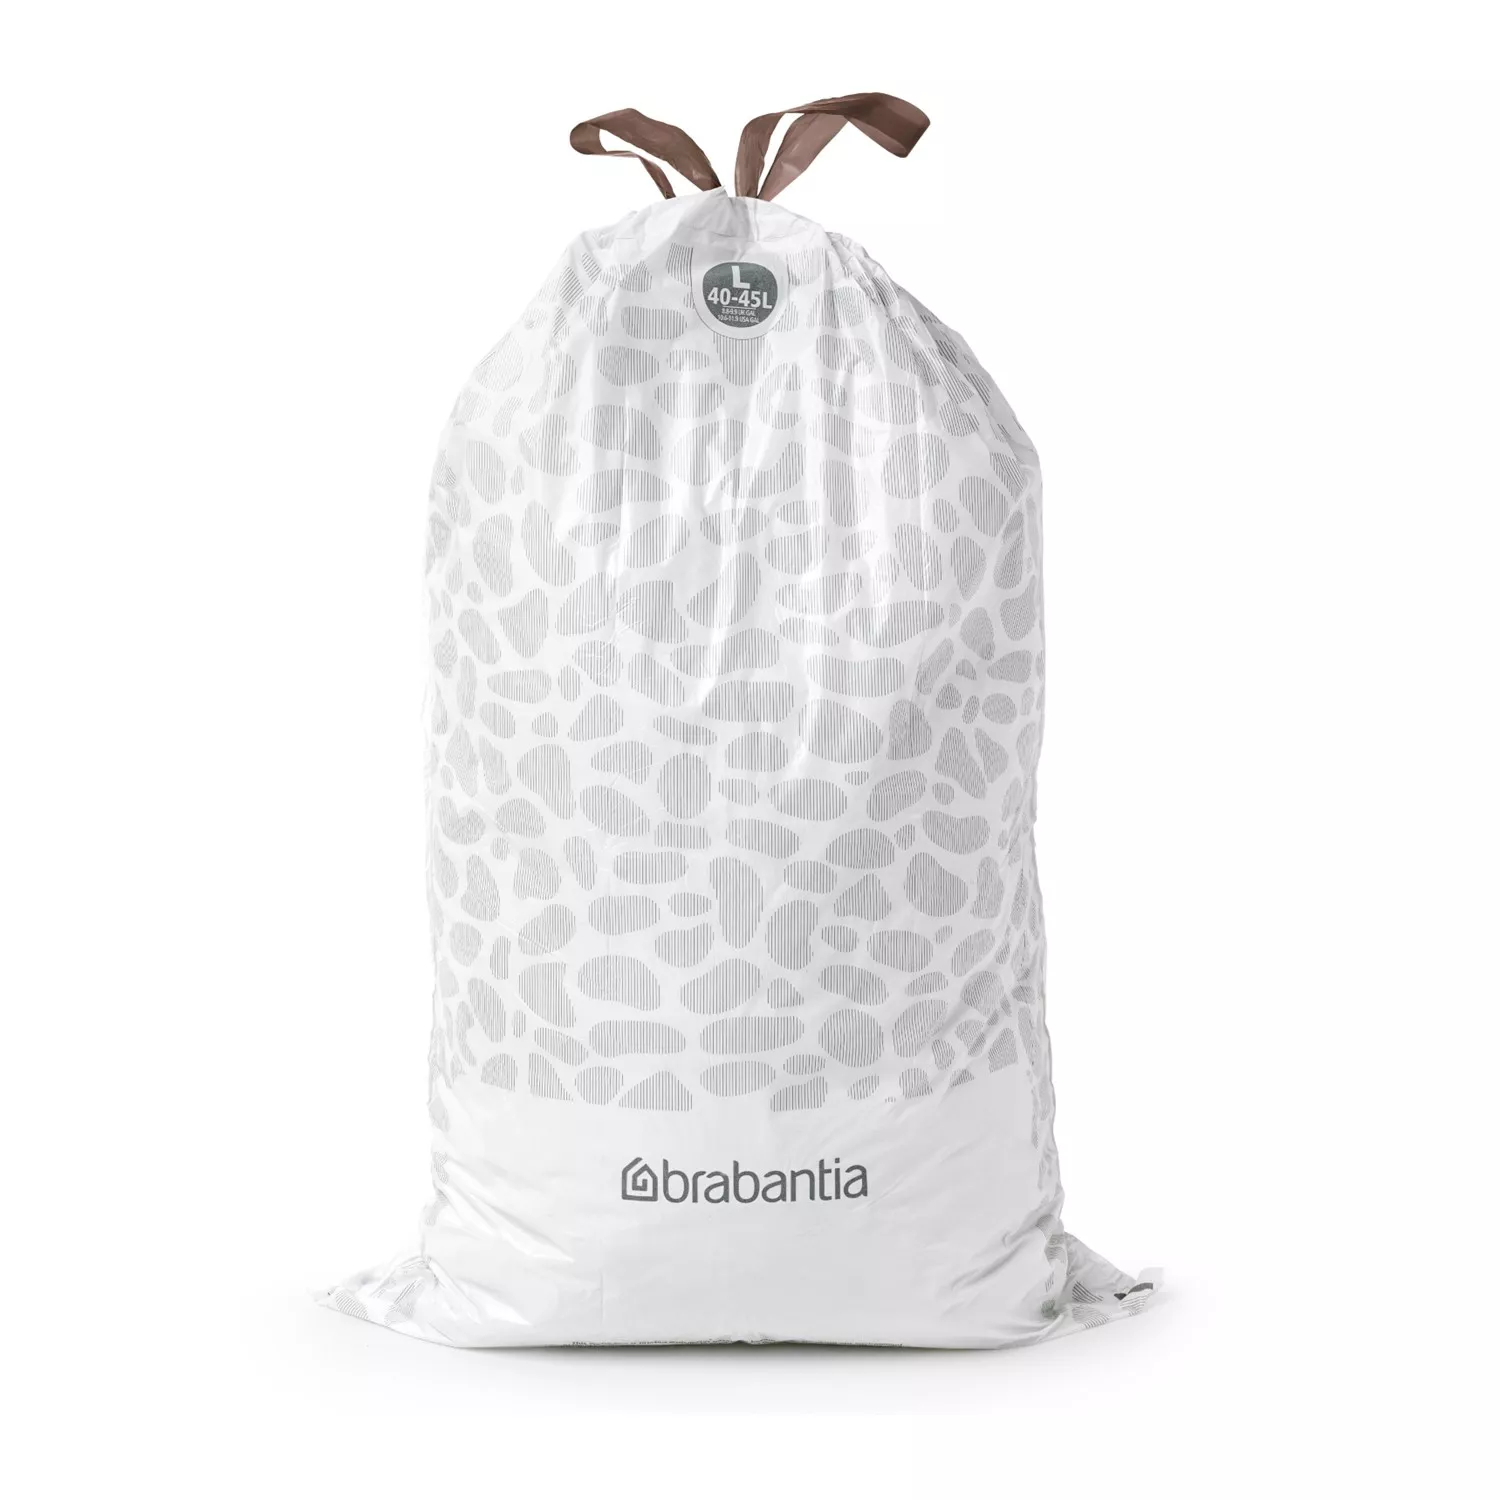 Brabantia PerfectFit Trash Bags, 120 Count